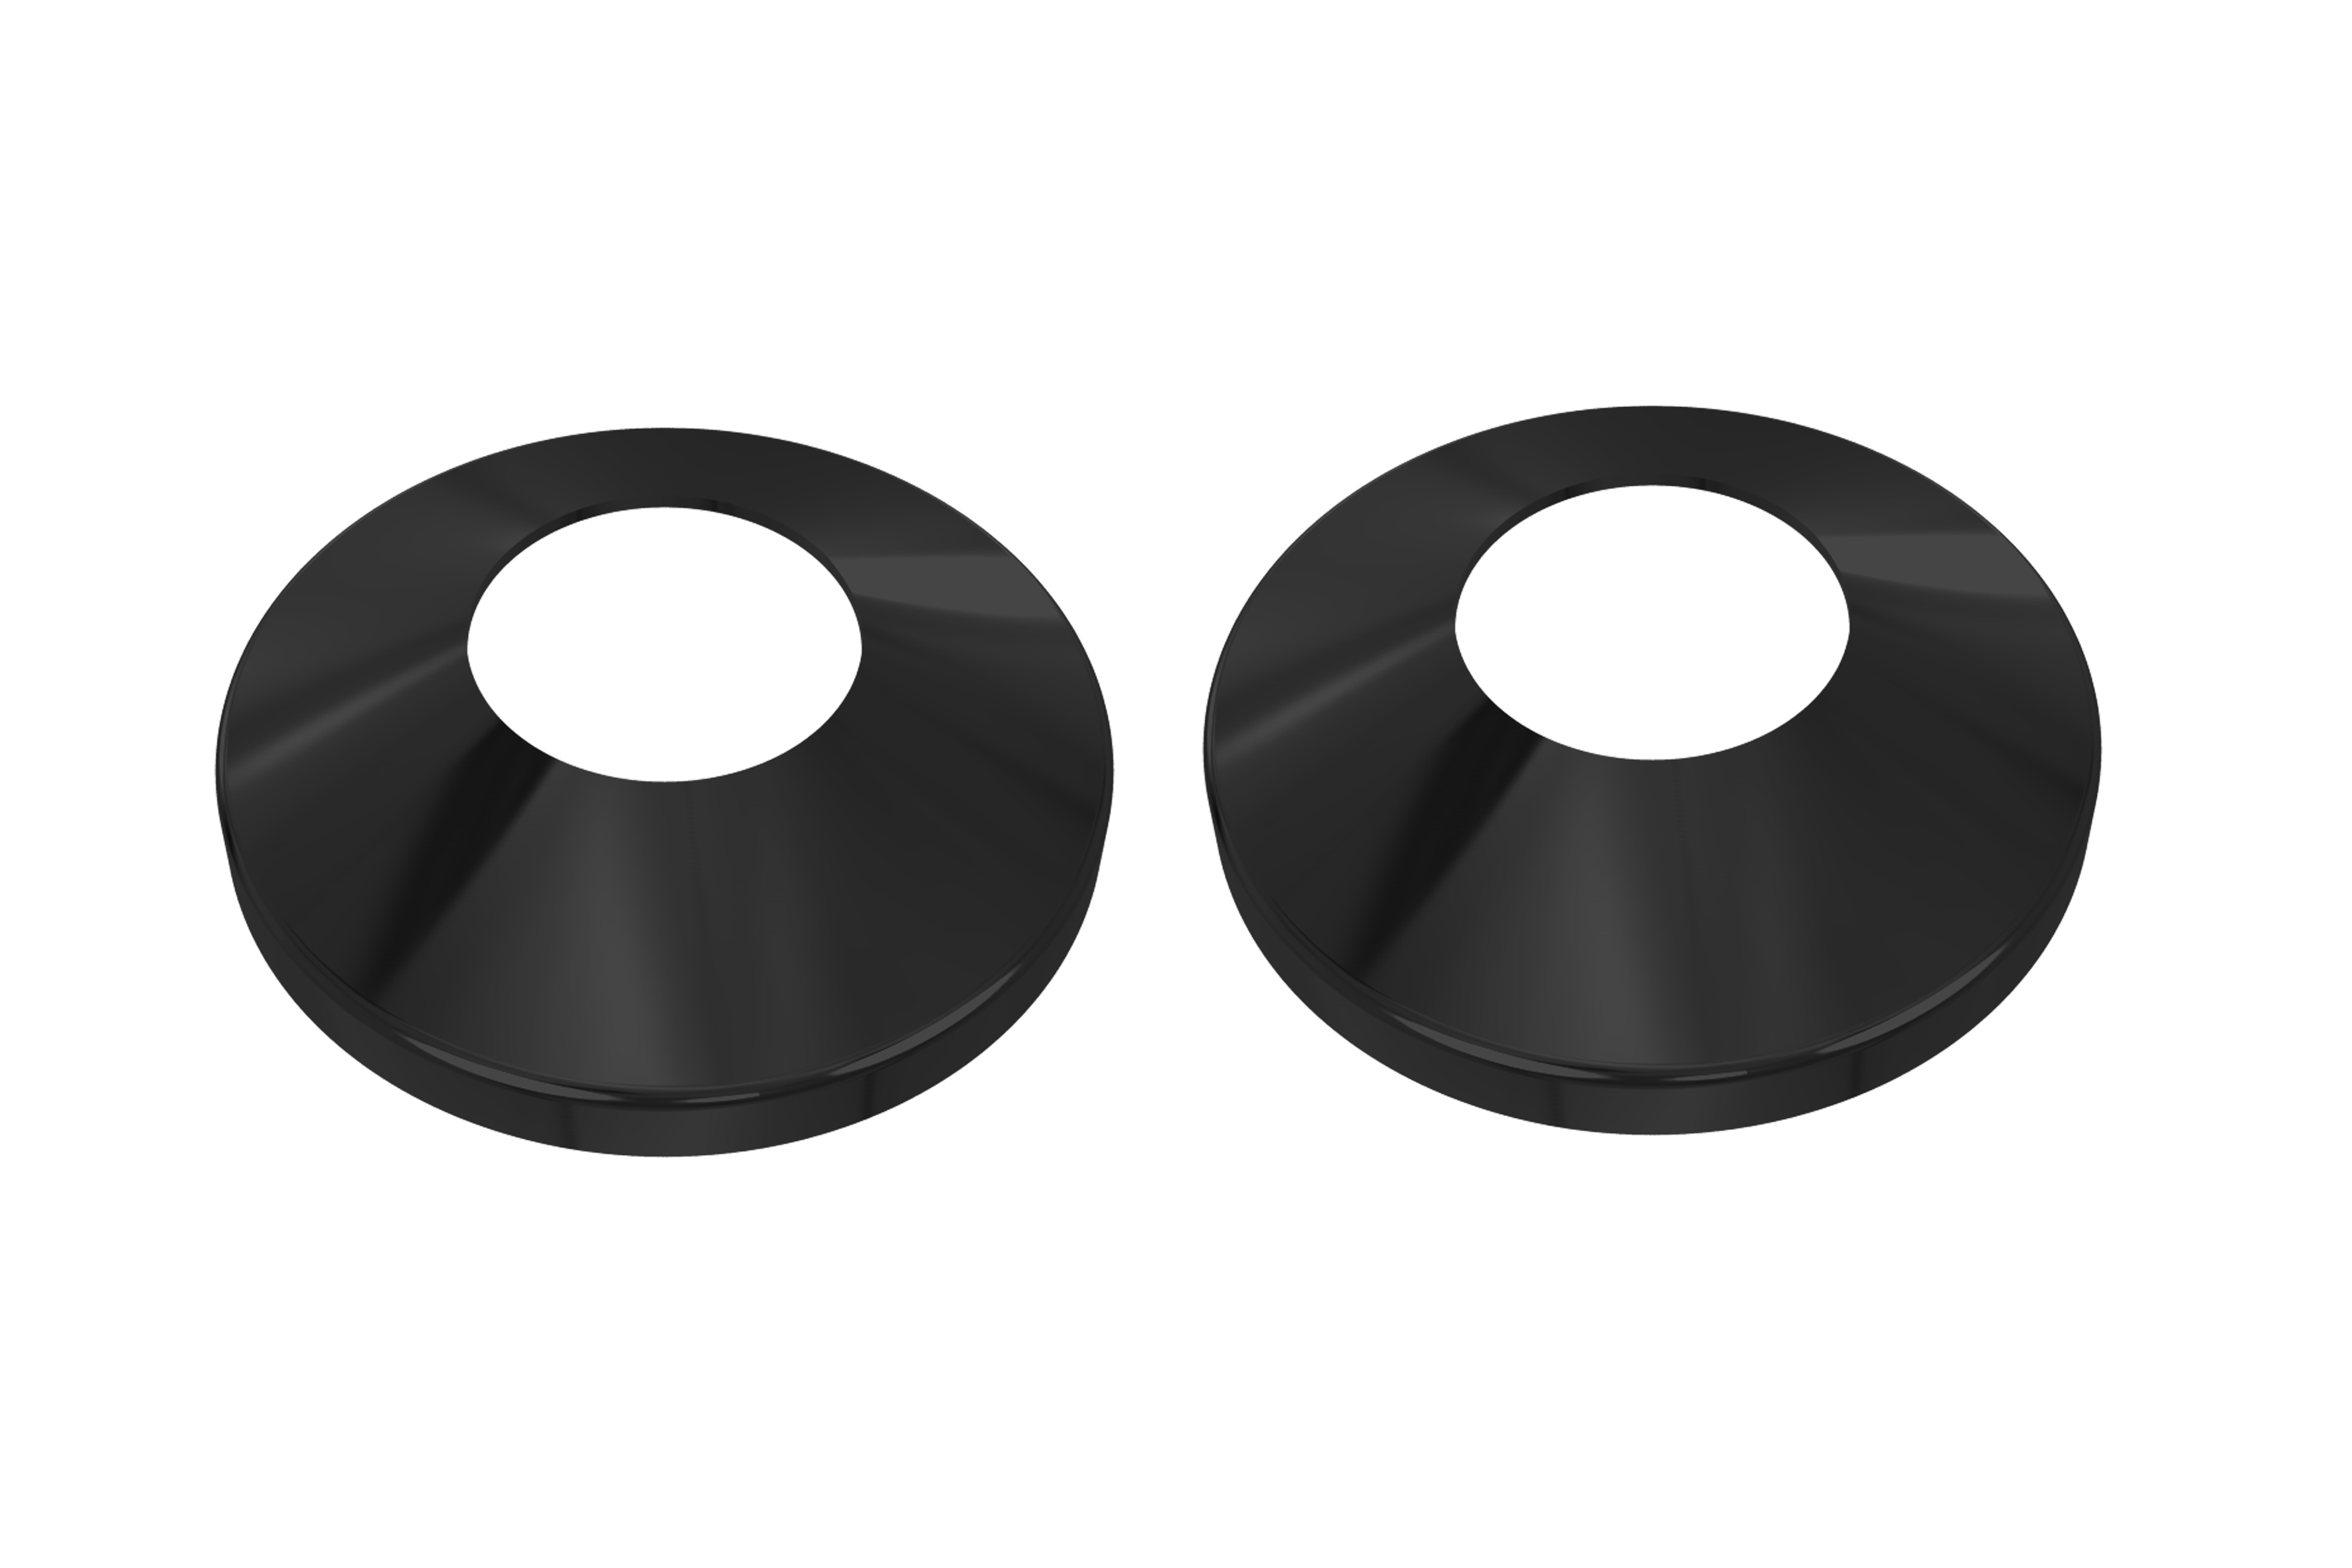 Комплект 2шт.: вентиль круглый г/ш 3/4х1/2, эксцентрик 3/4х1/2, отражатель 3/4, цвет черный муар AQ 1020BL - 2